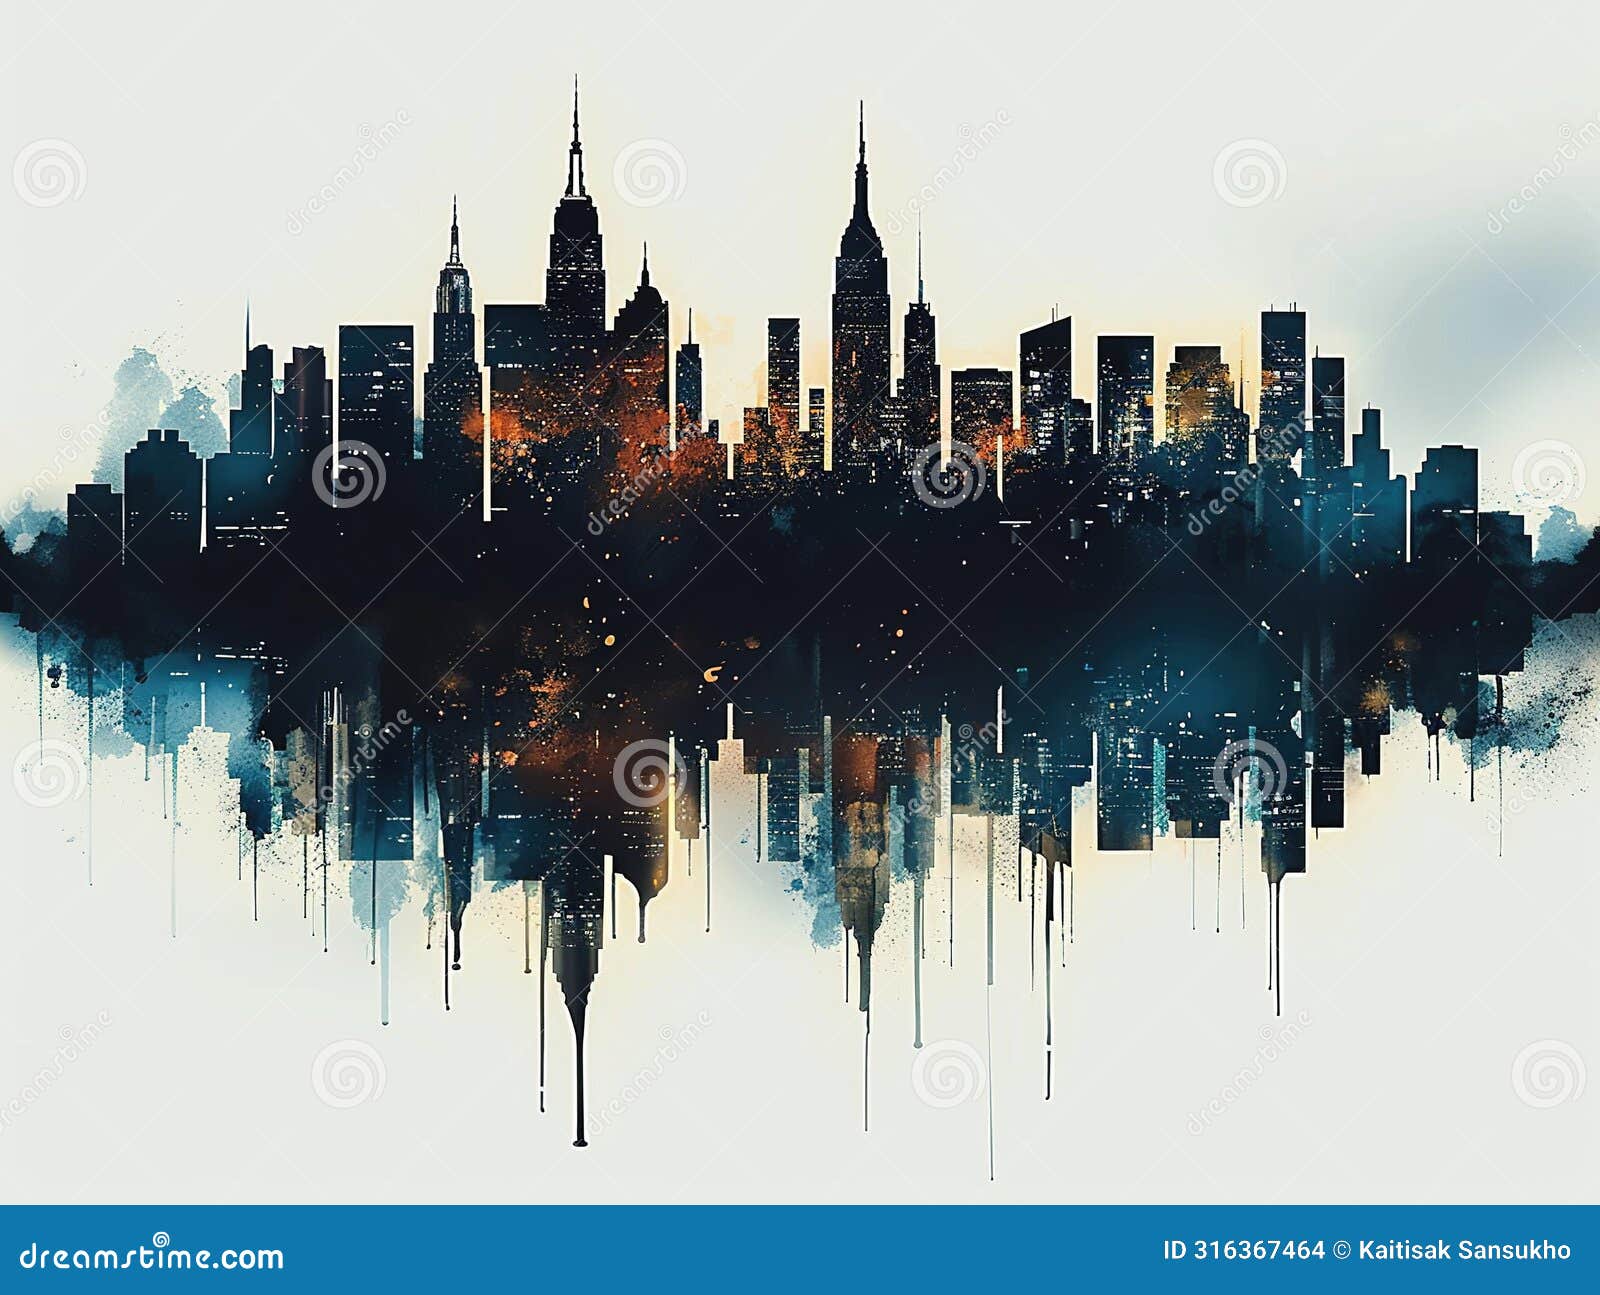 new york city skyline watercolor painting